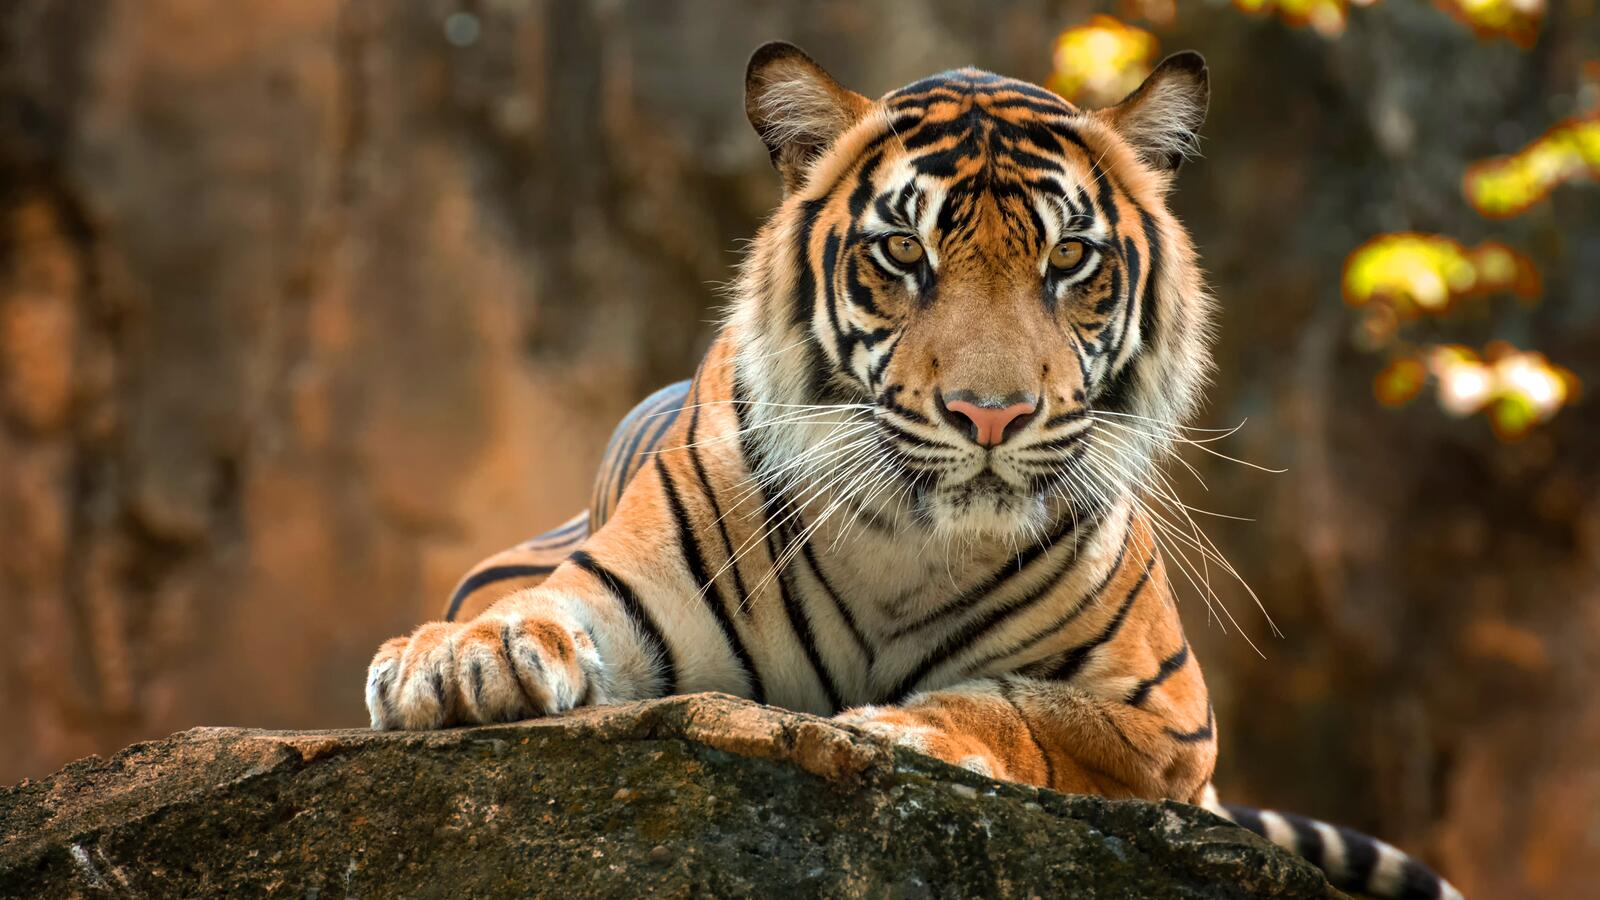 Wallpapers tiger animals lies on the desktop